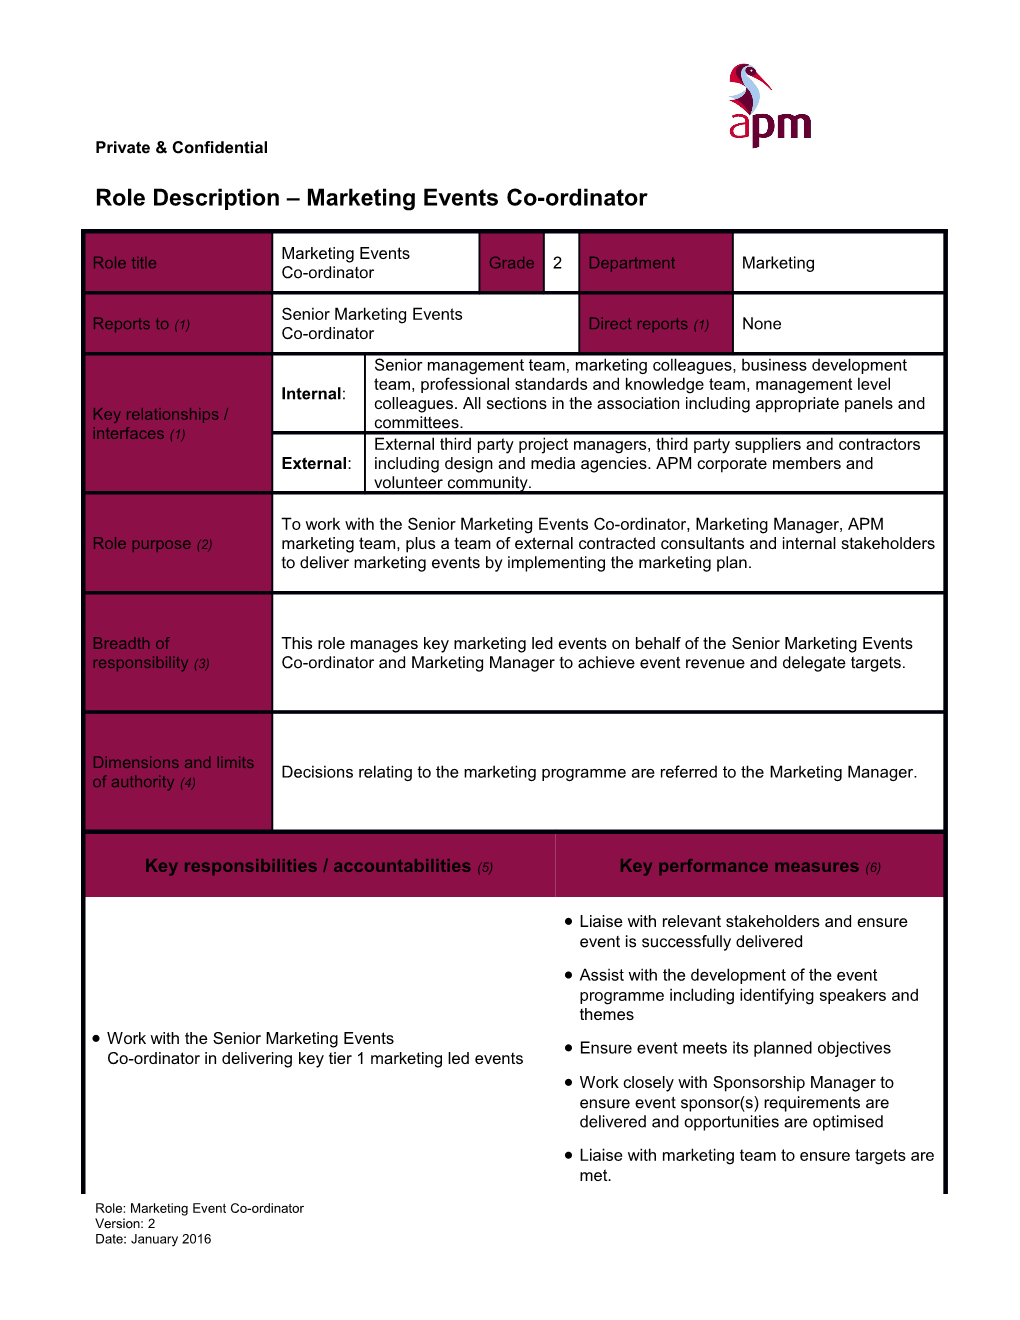 Role Description Marketingeventsco-Ordinator